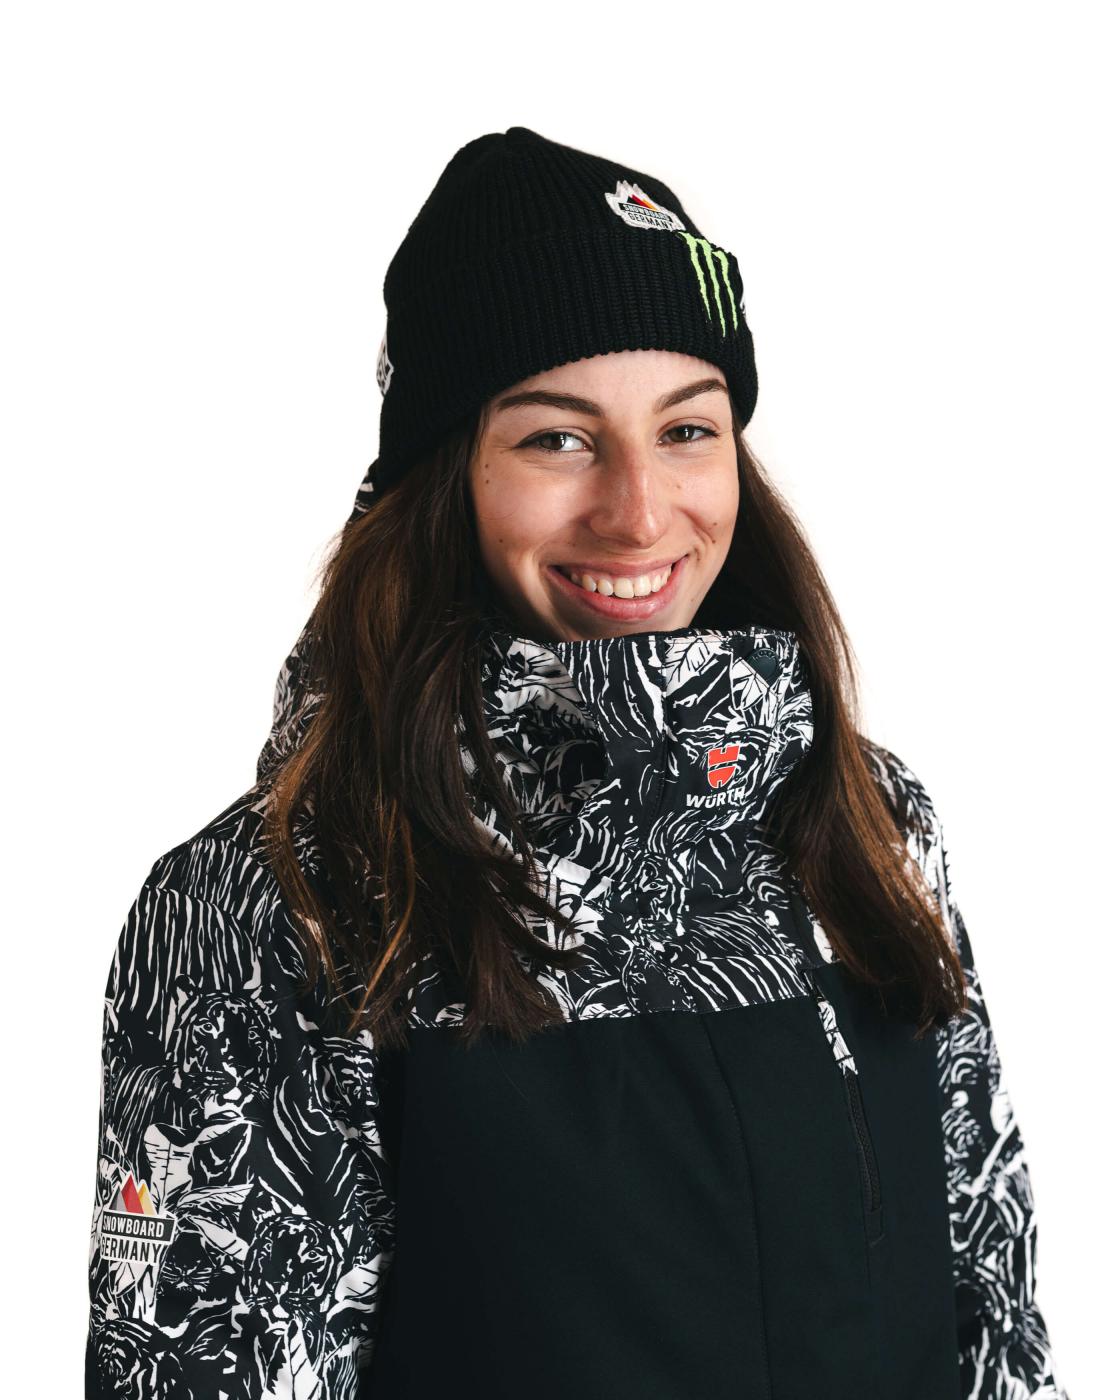 Snowboarderin Annika Morgan